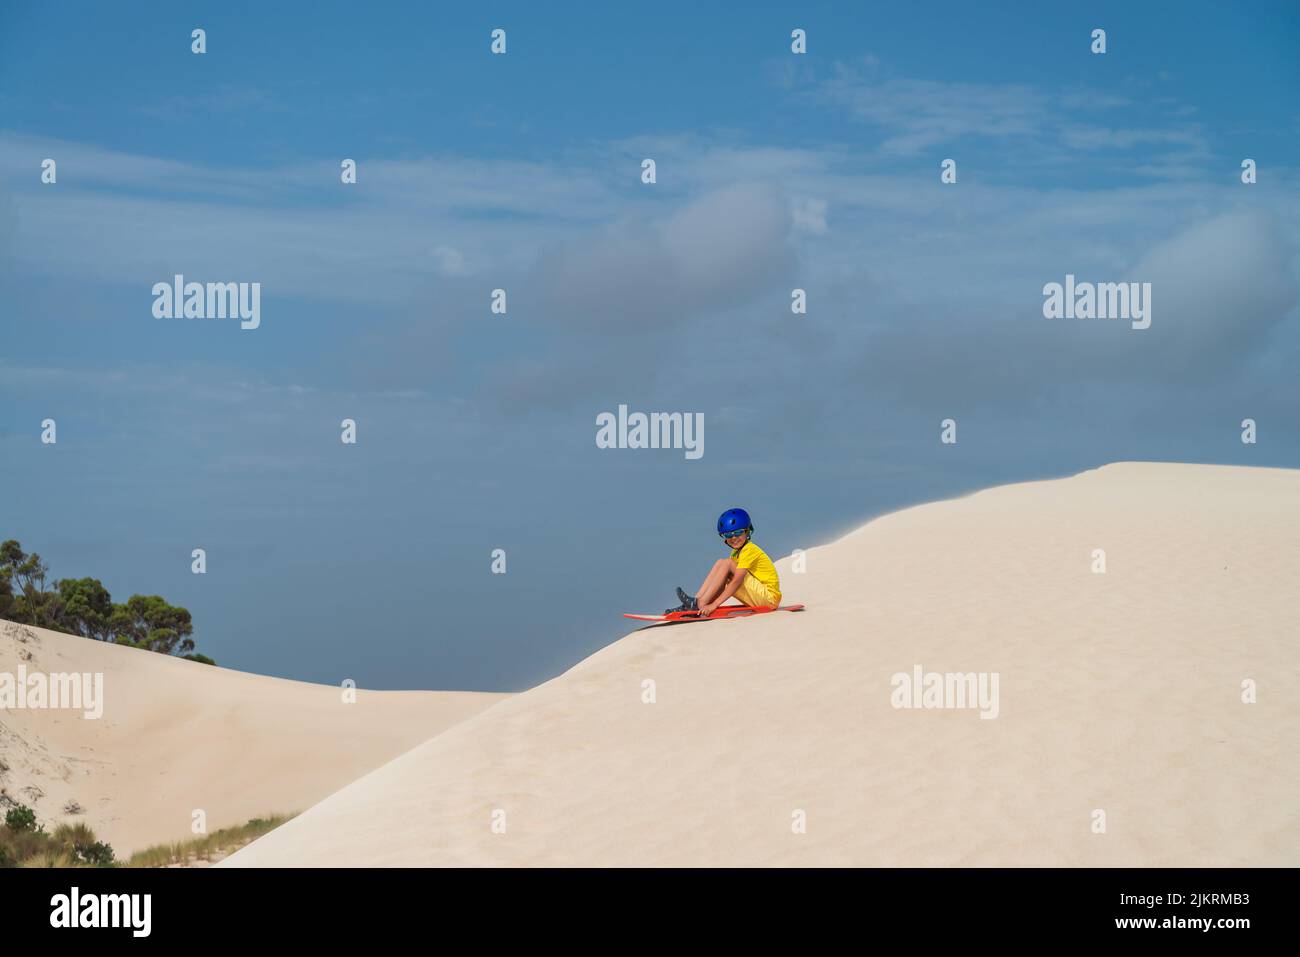 Boy is ready for sliding down the sand dune on sandboard, Kangaroo Island, South Australia Stock Photo